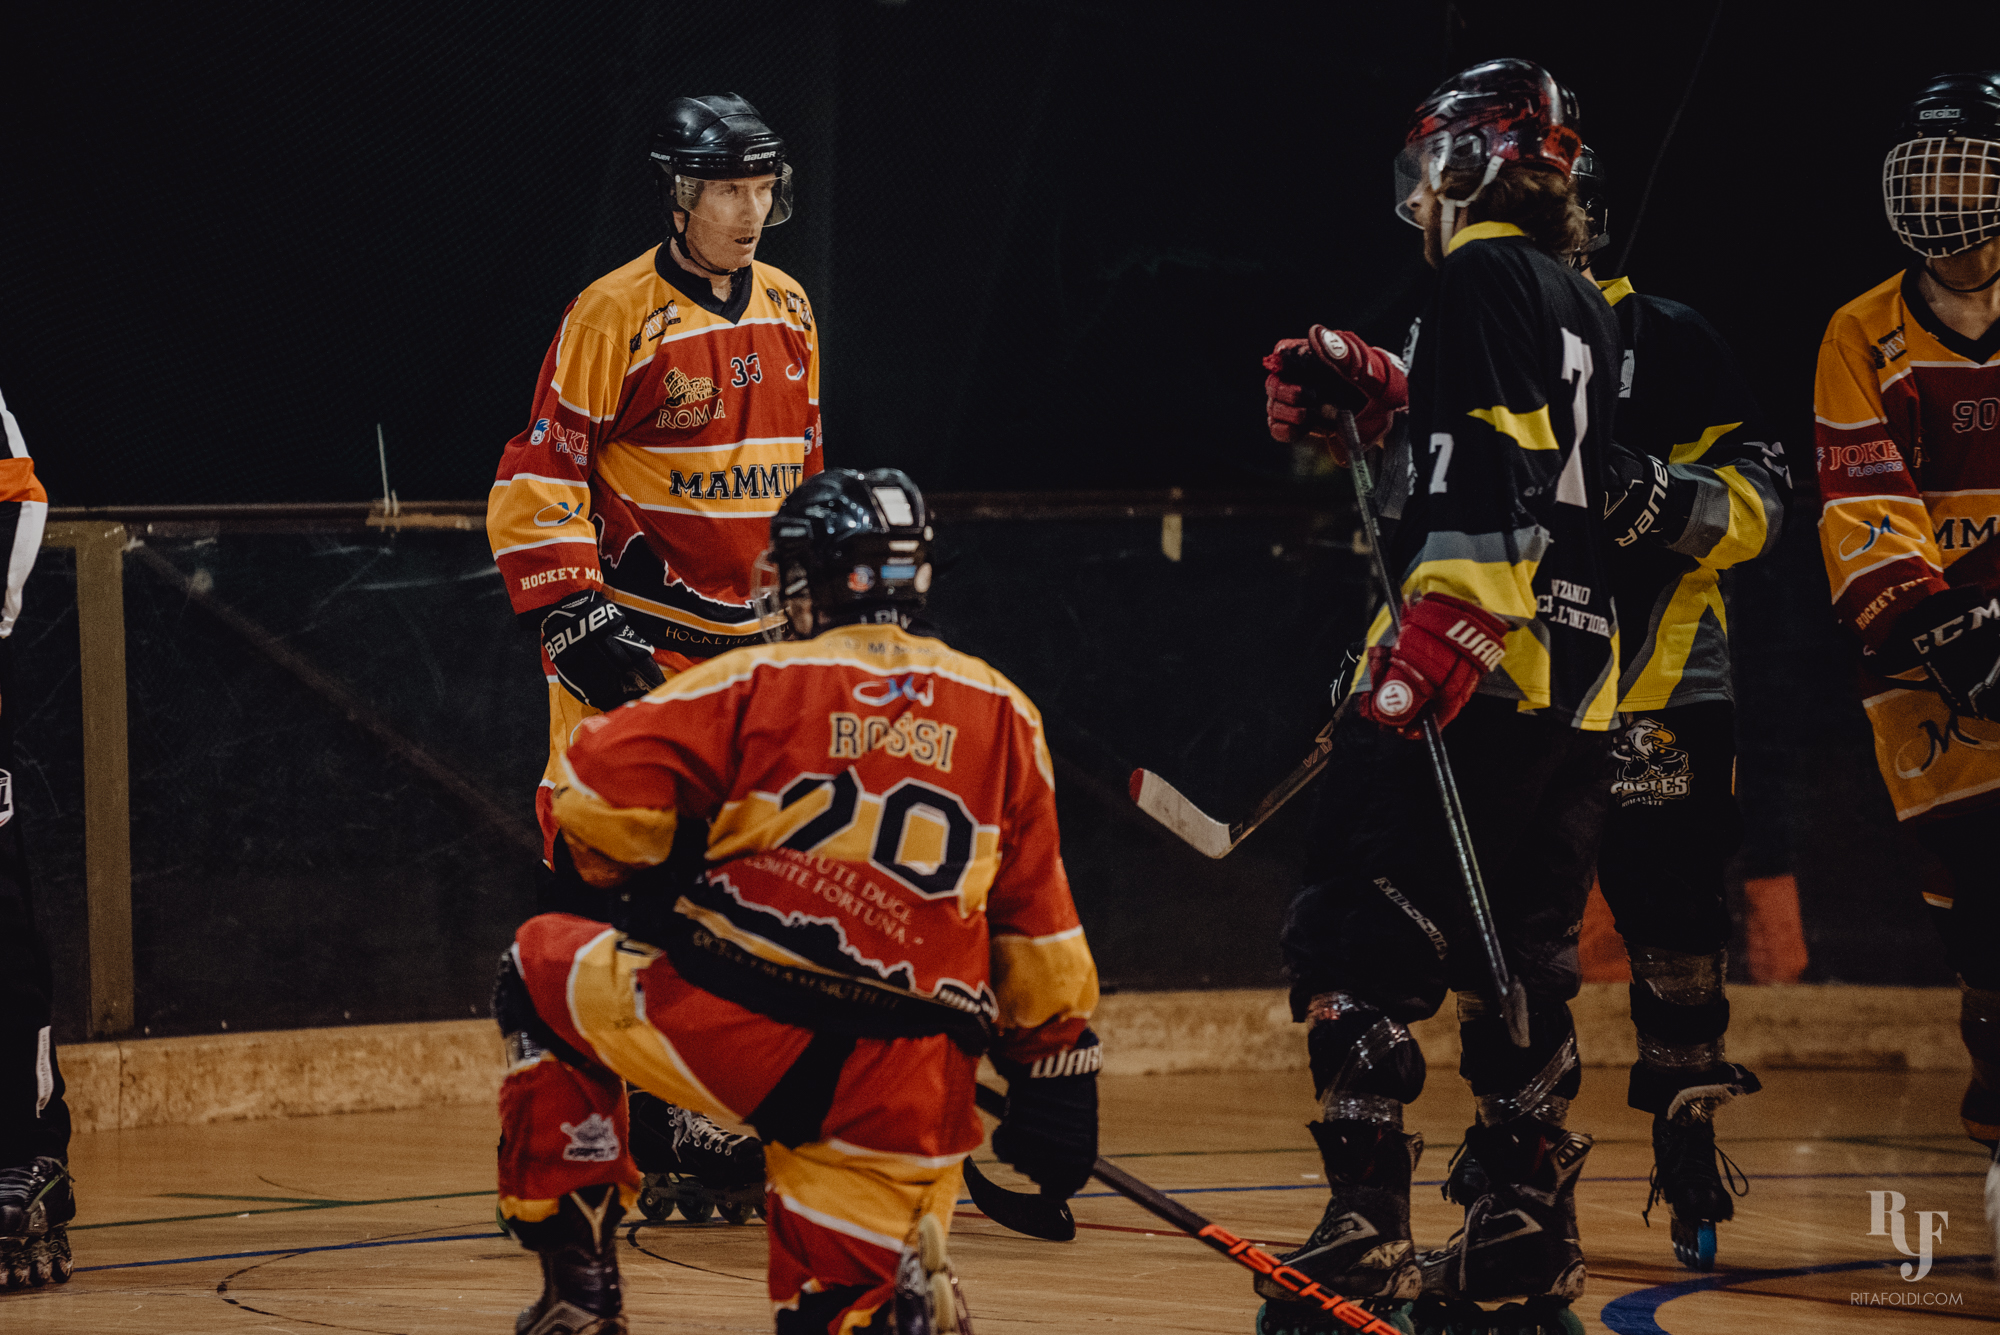 hockey roma, inline hockey roma, roma hockey, rome hockey, inline hockey rome, mammuth hockey, mammuth roma, hockey mammuth, sports photography, rita foldi photography